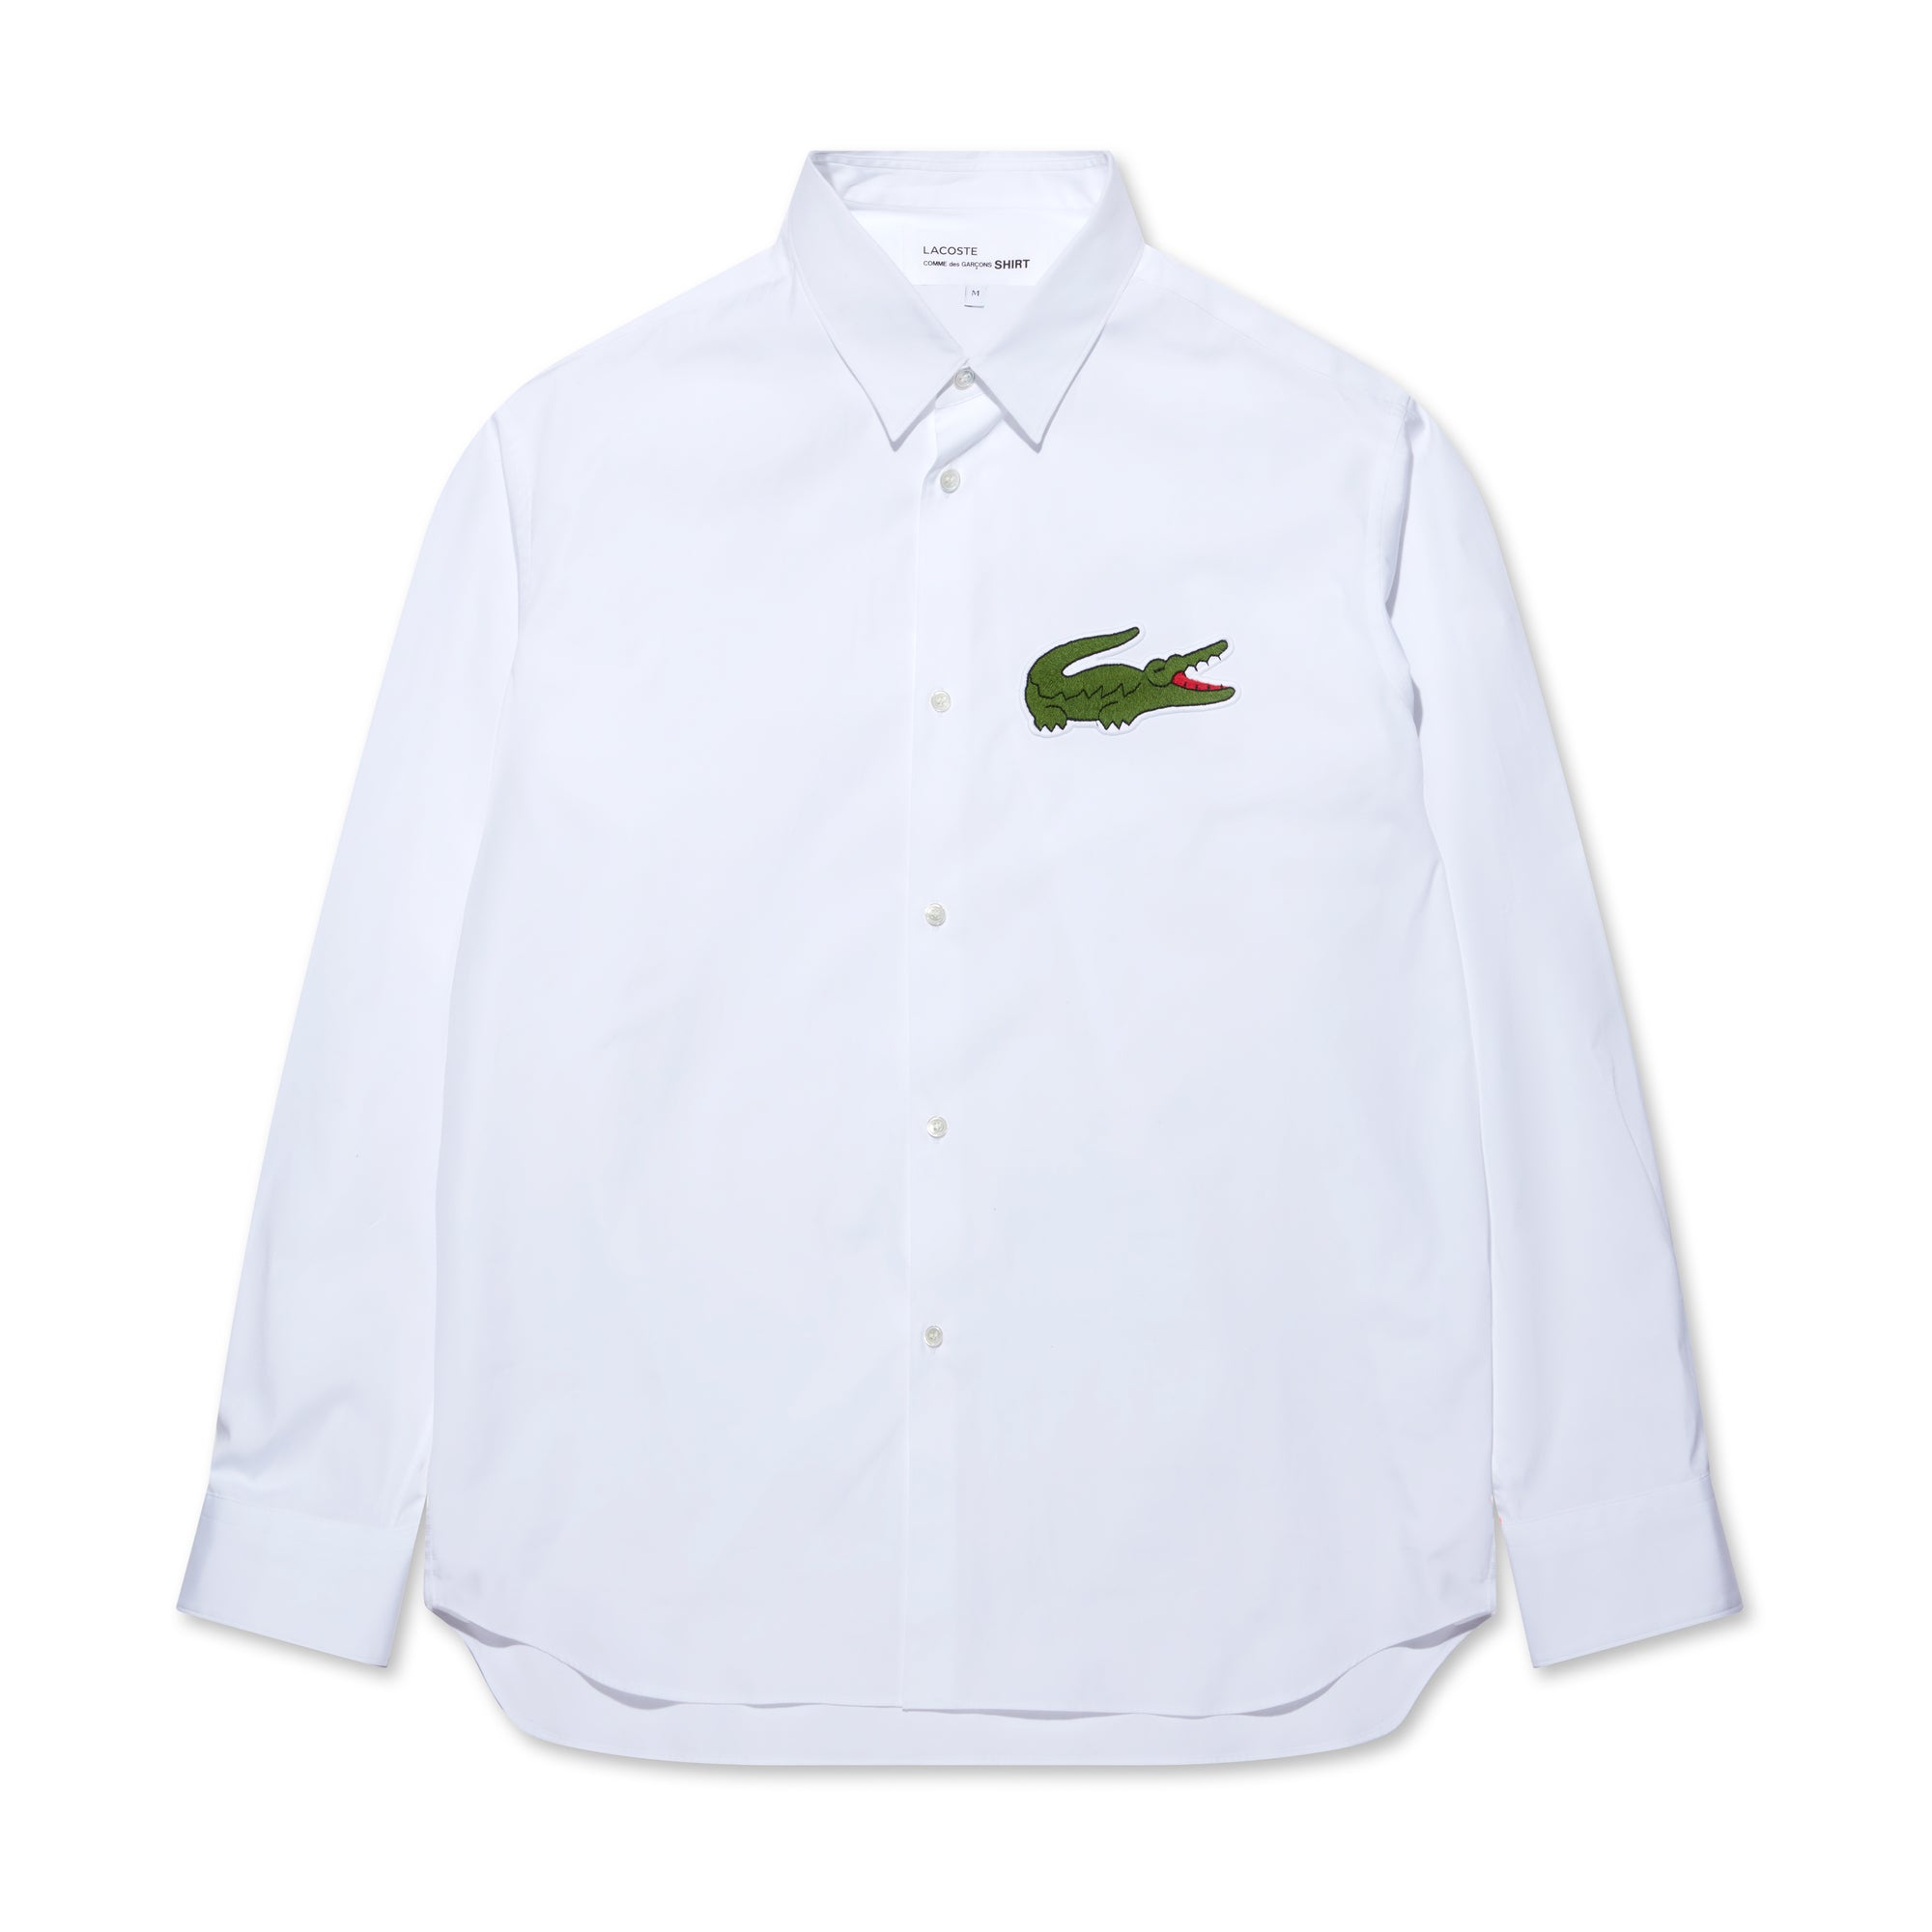 CDG Shirt - Lacoste Men’s Shirt - (White) view 5